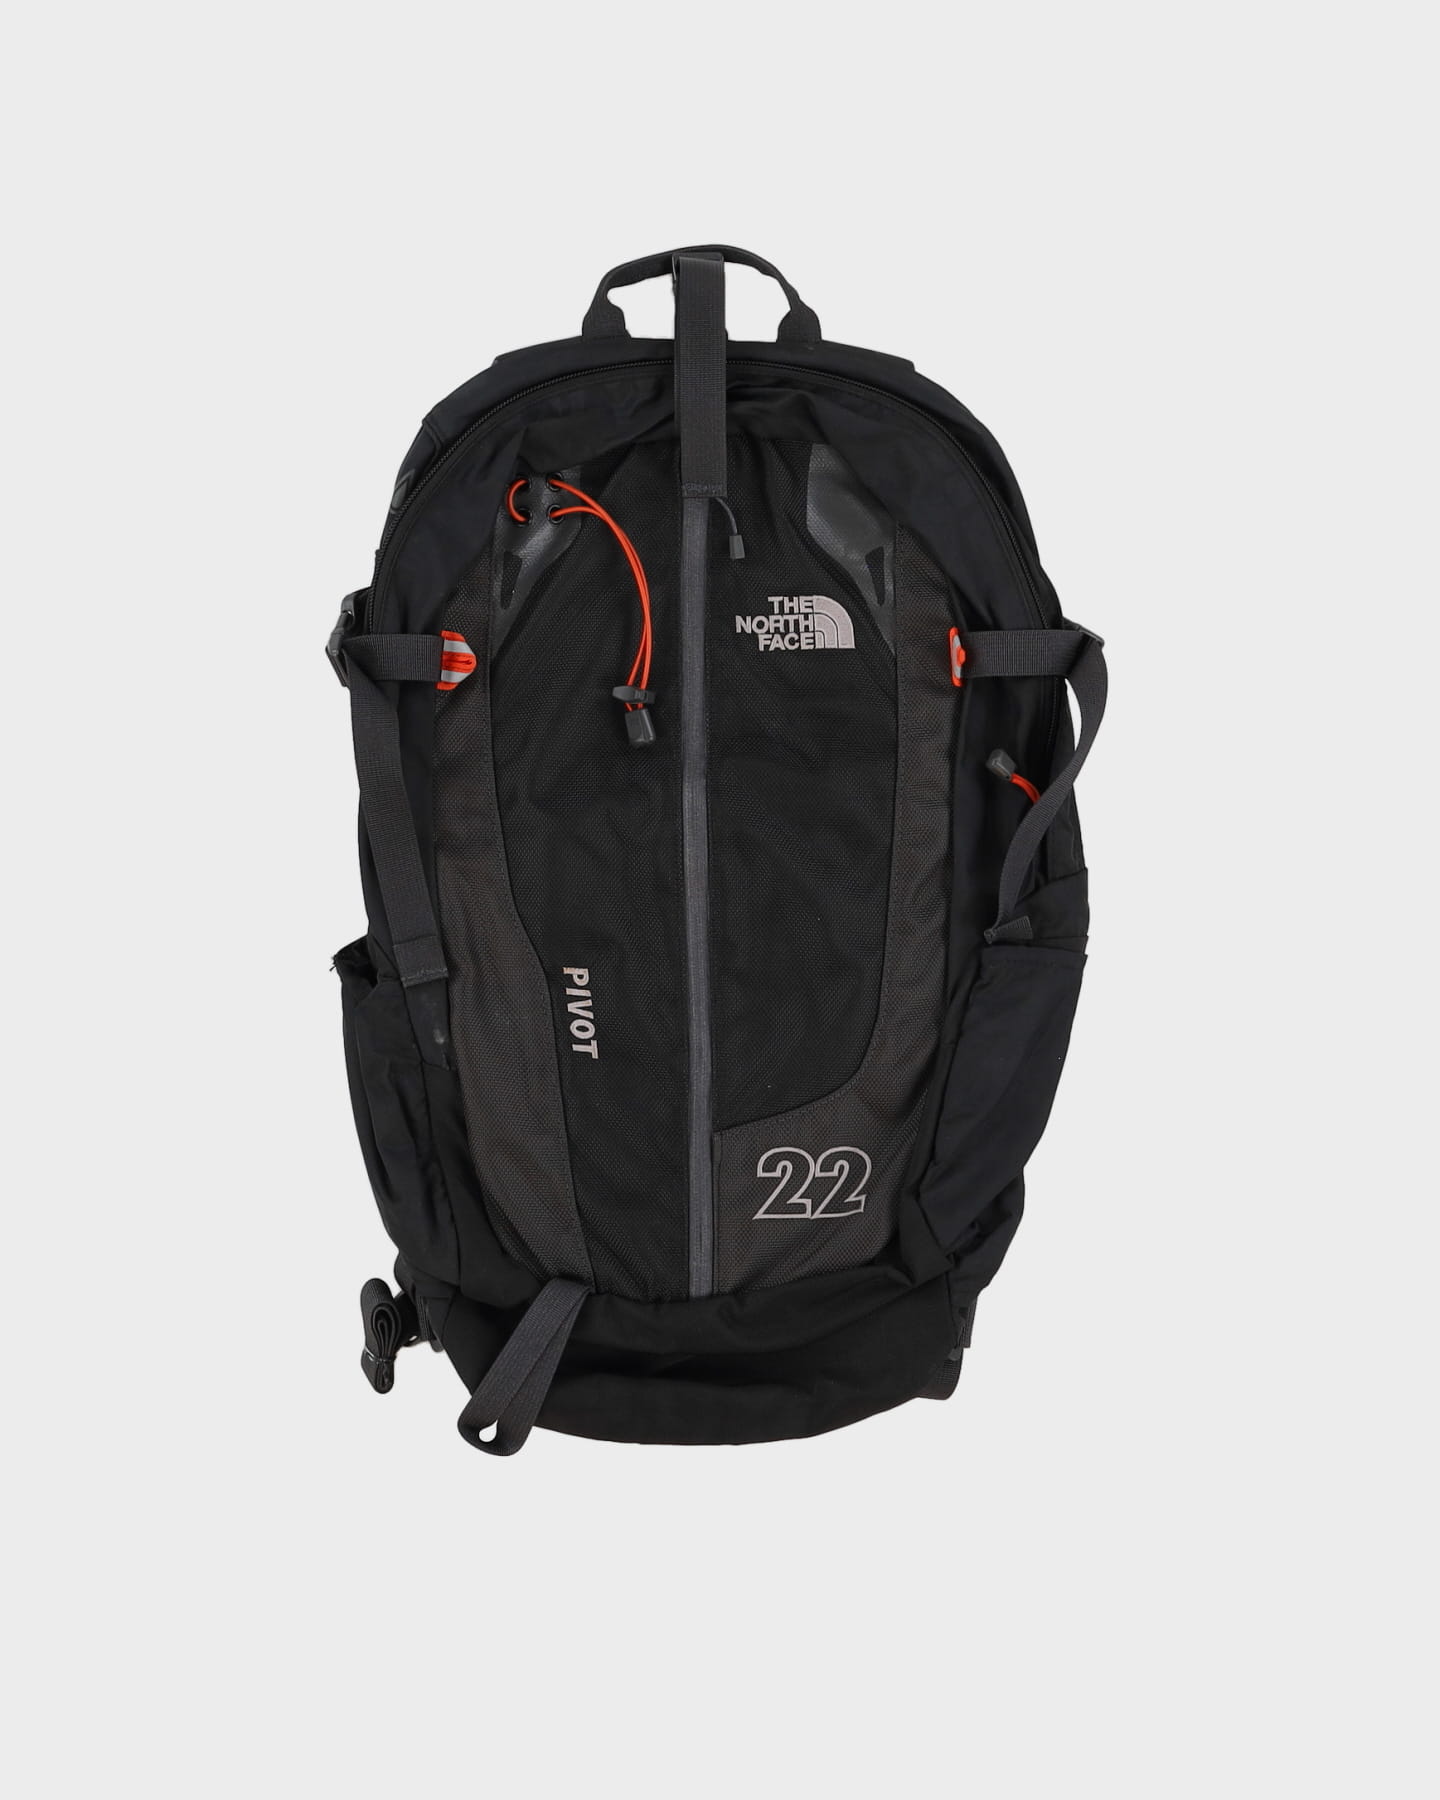 The North Face Black Pivot 22 Rucksack / Backpack